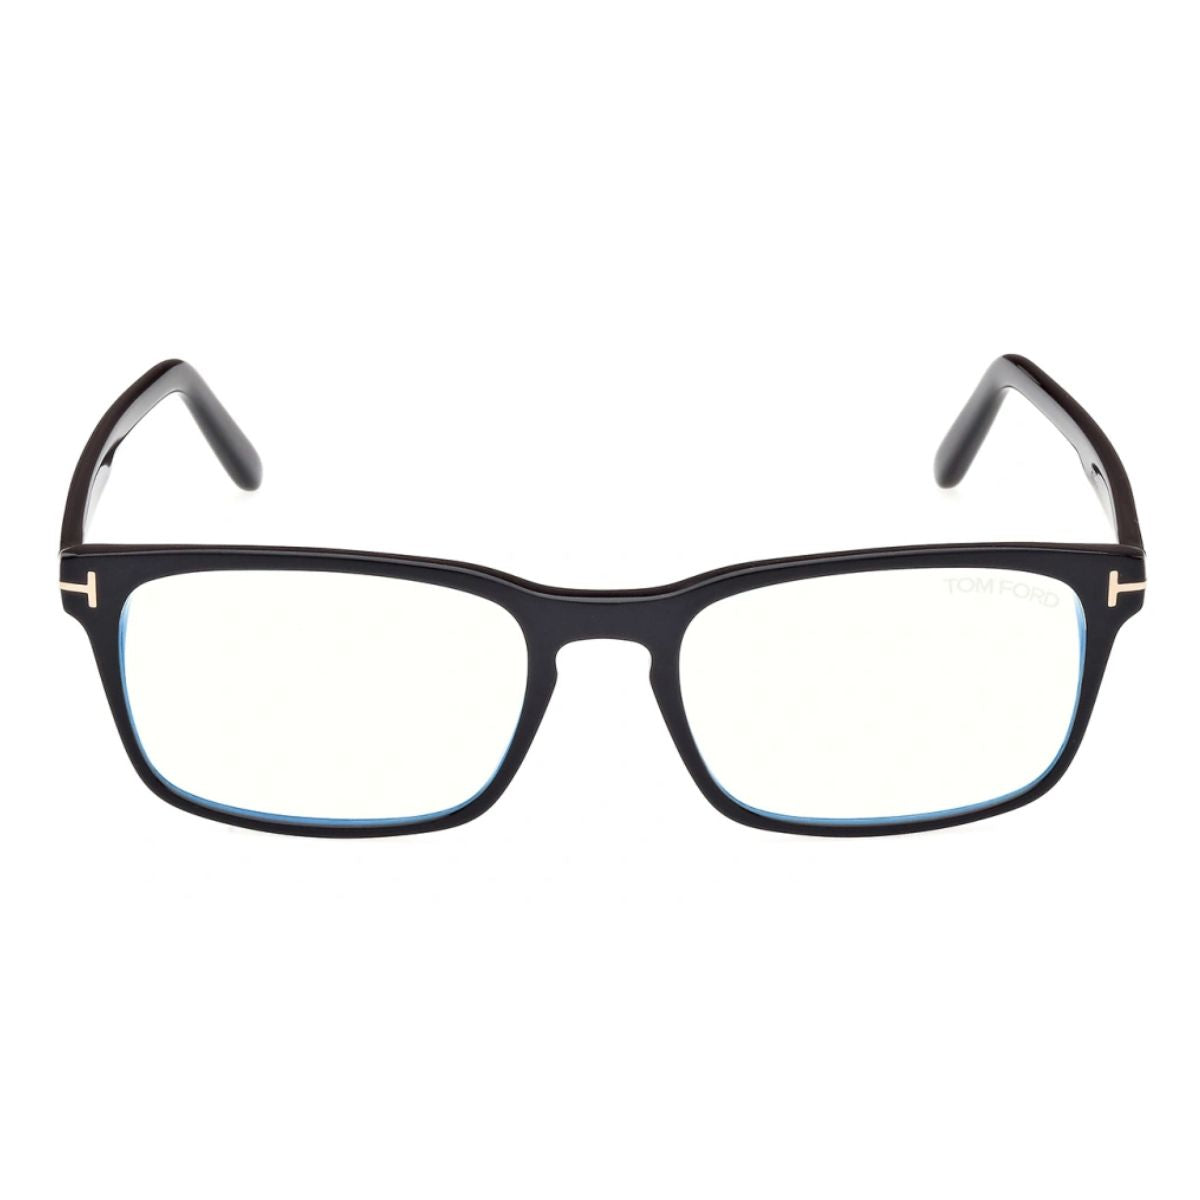 "Men's black rectangle glasses, Tom Ford TF 5938 001, Optorium."